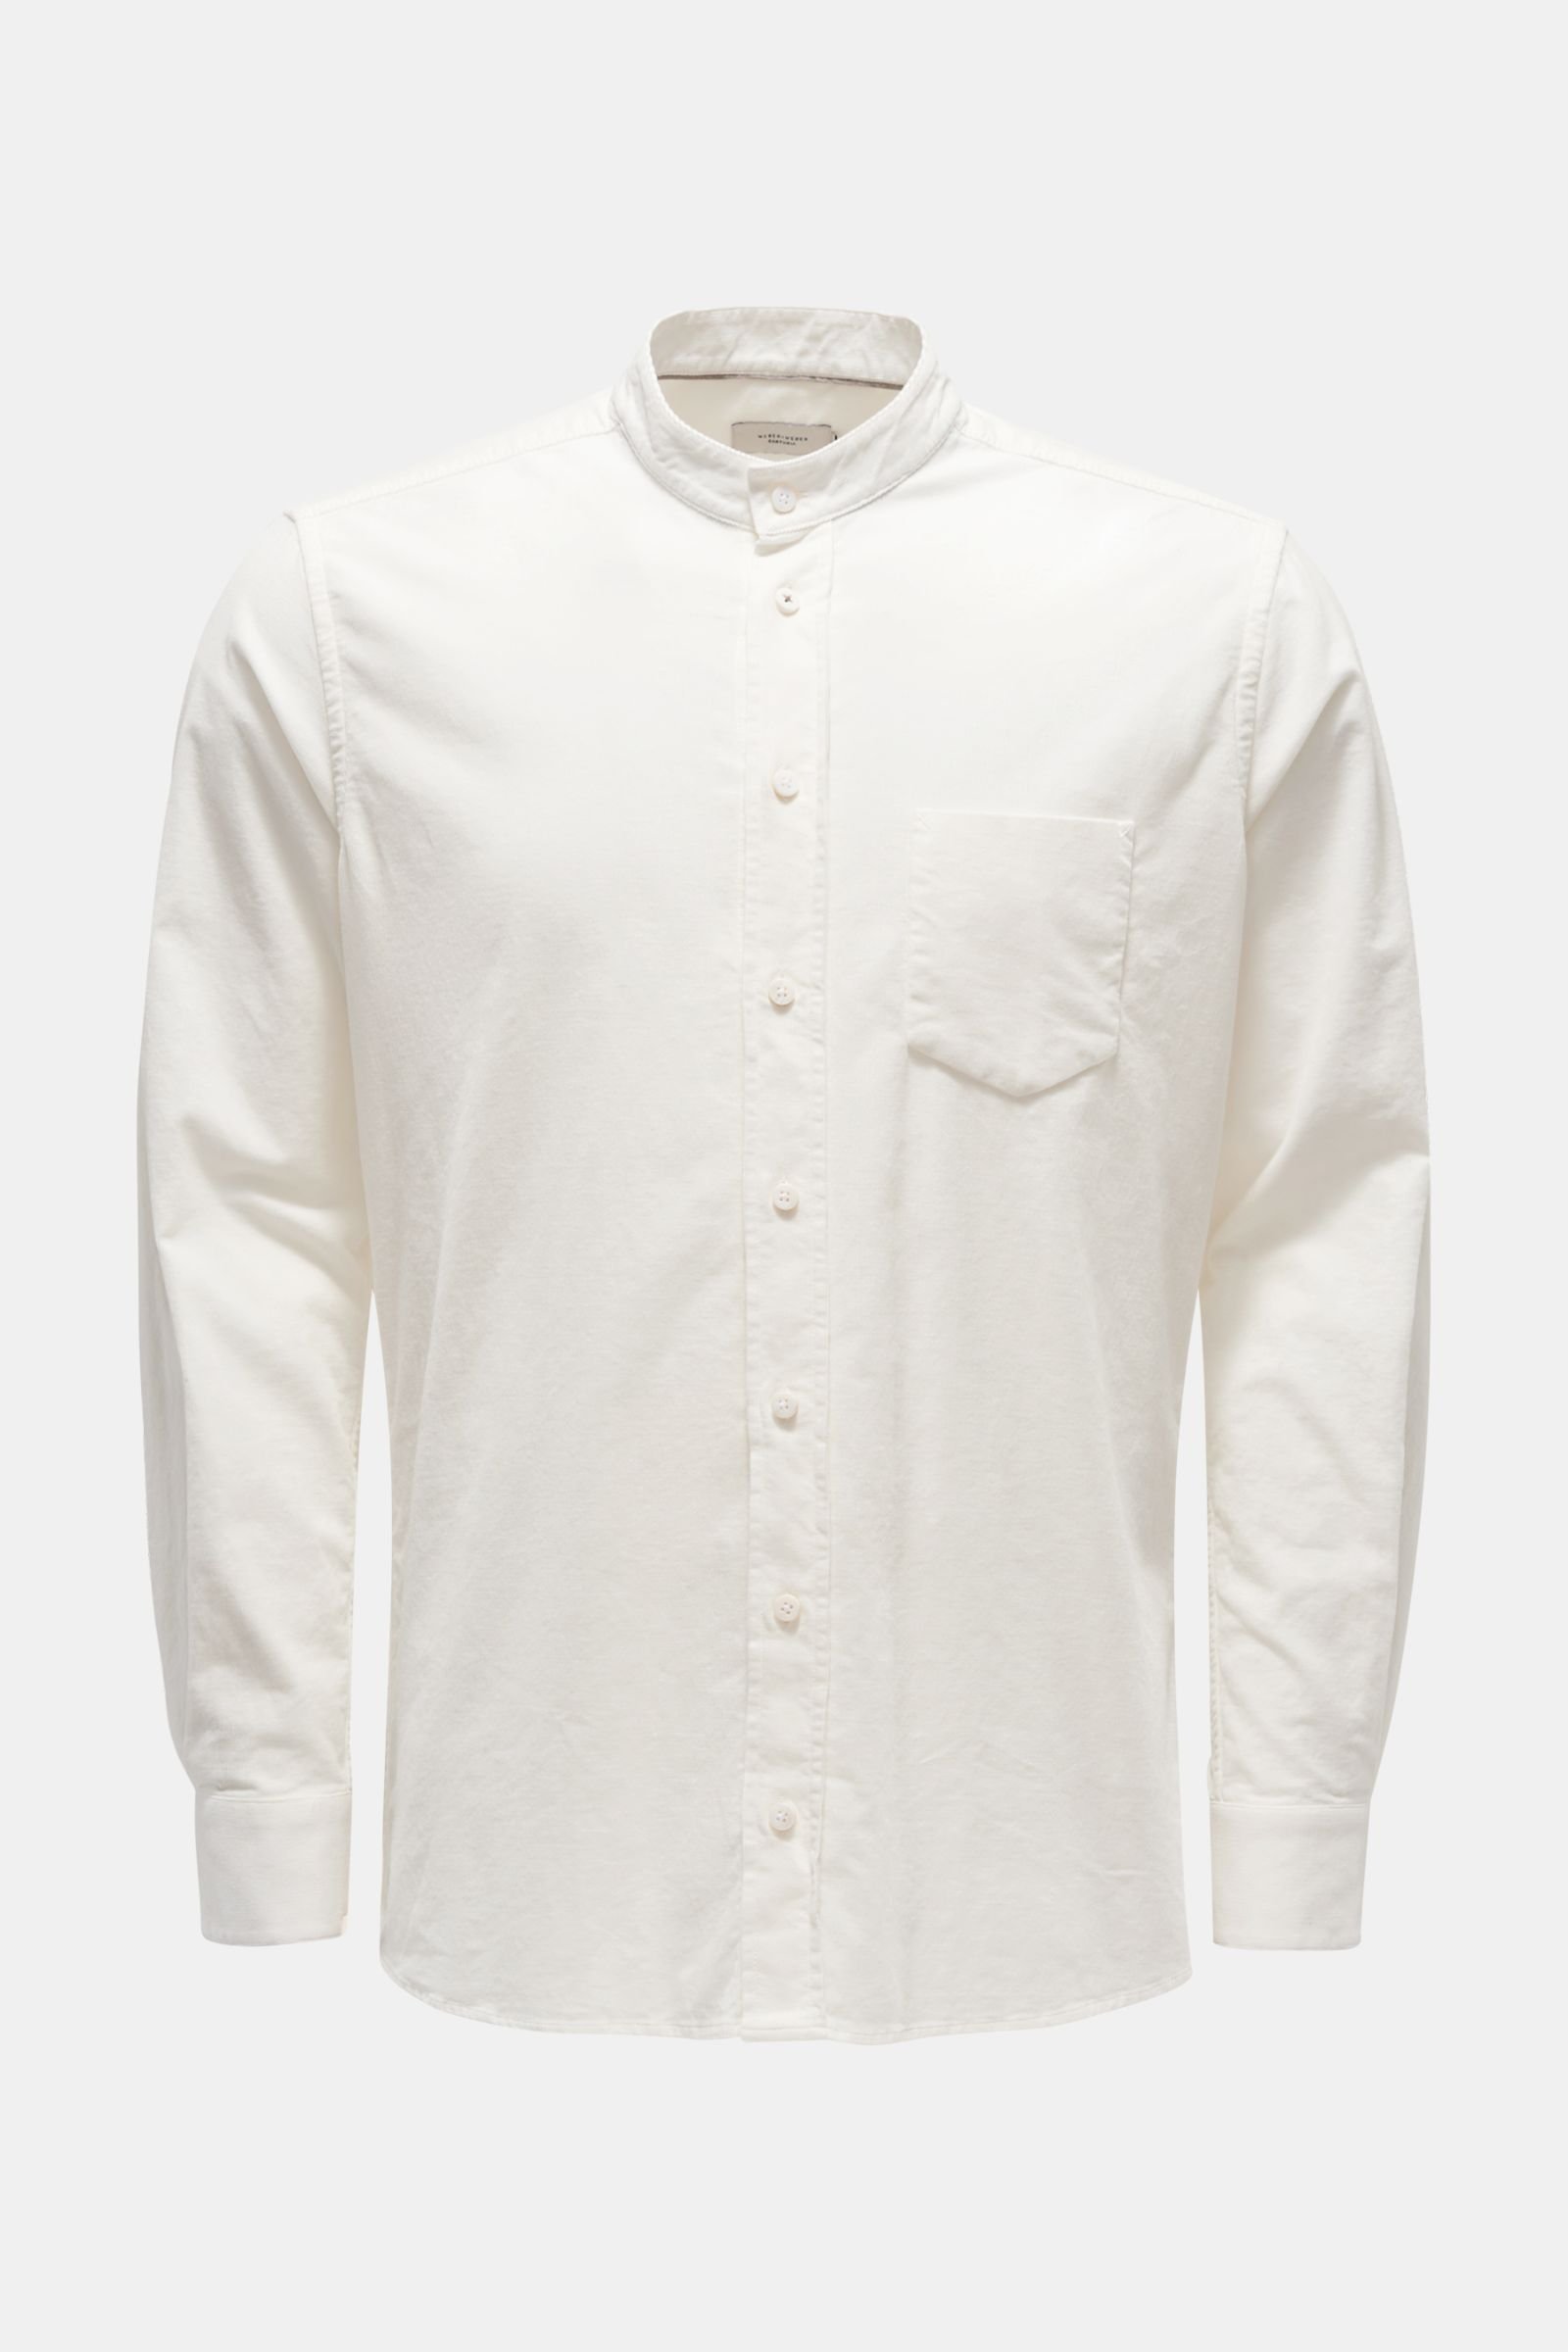 Corduroy shirt grandad collar white